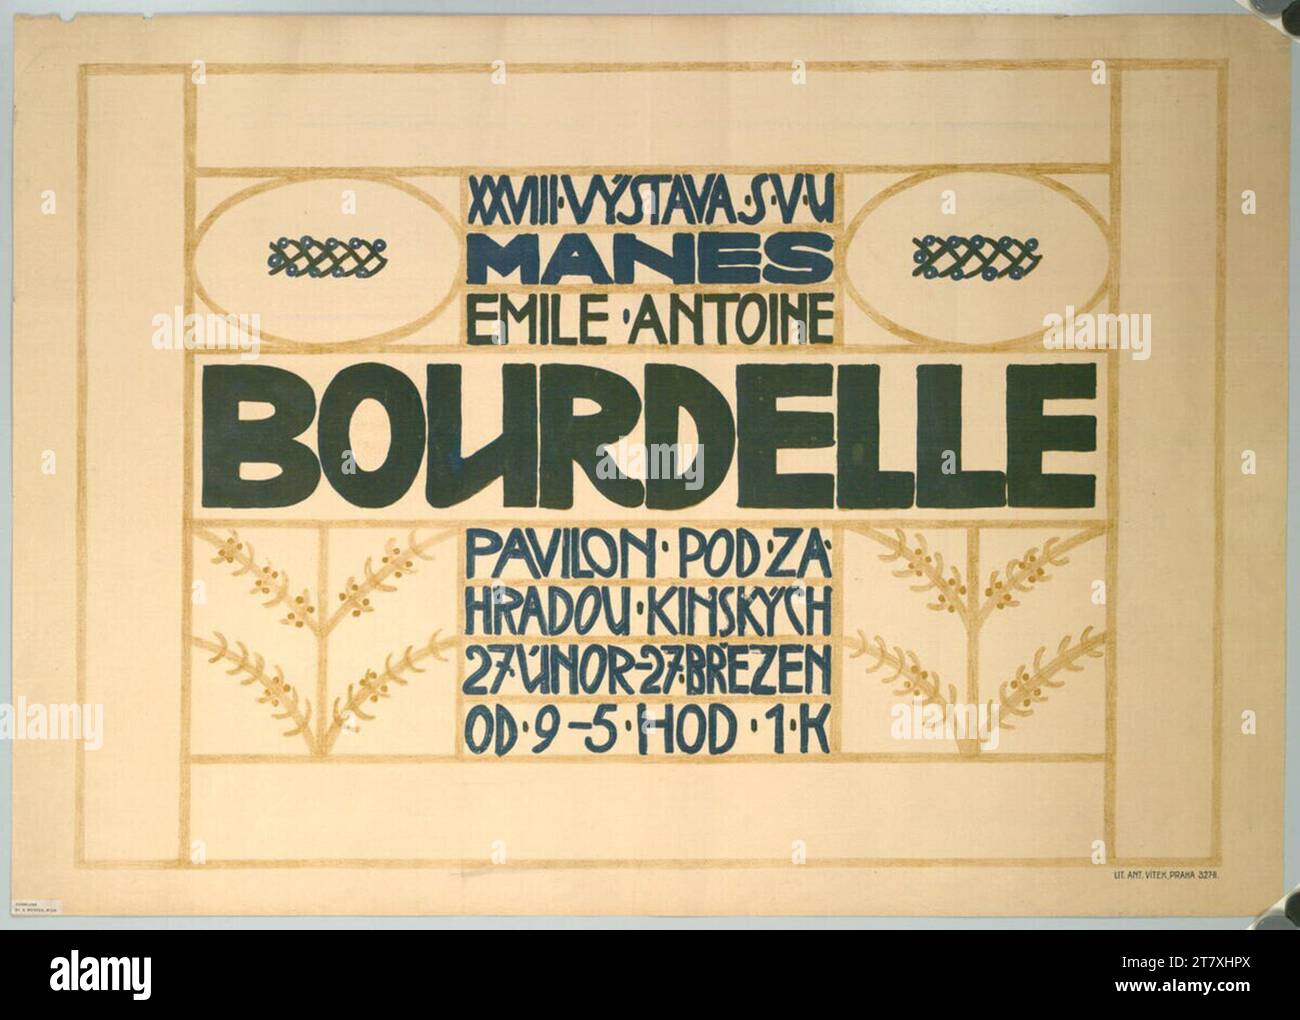 Frantisek Kysela XXVIII. Výstava s.v.u.Manes, Emile Antoine Bourdelle. Color 1909 , 1909 Stock Photo